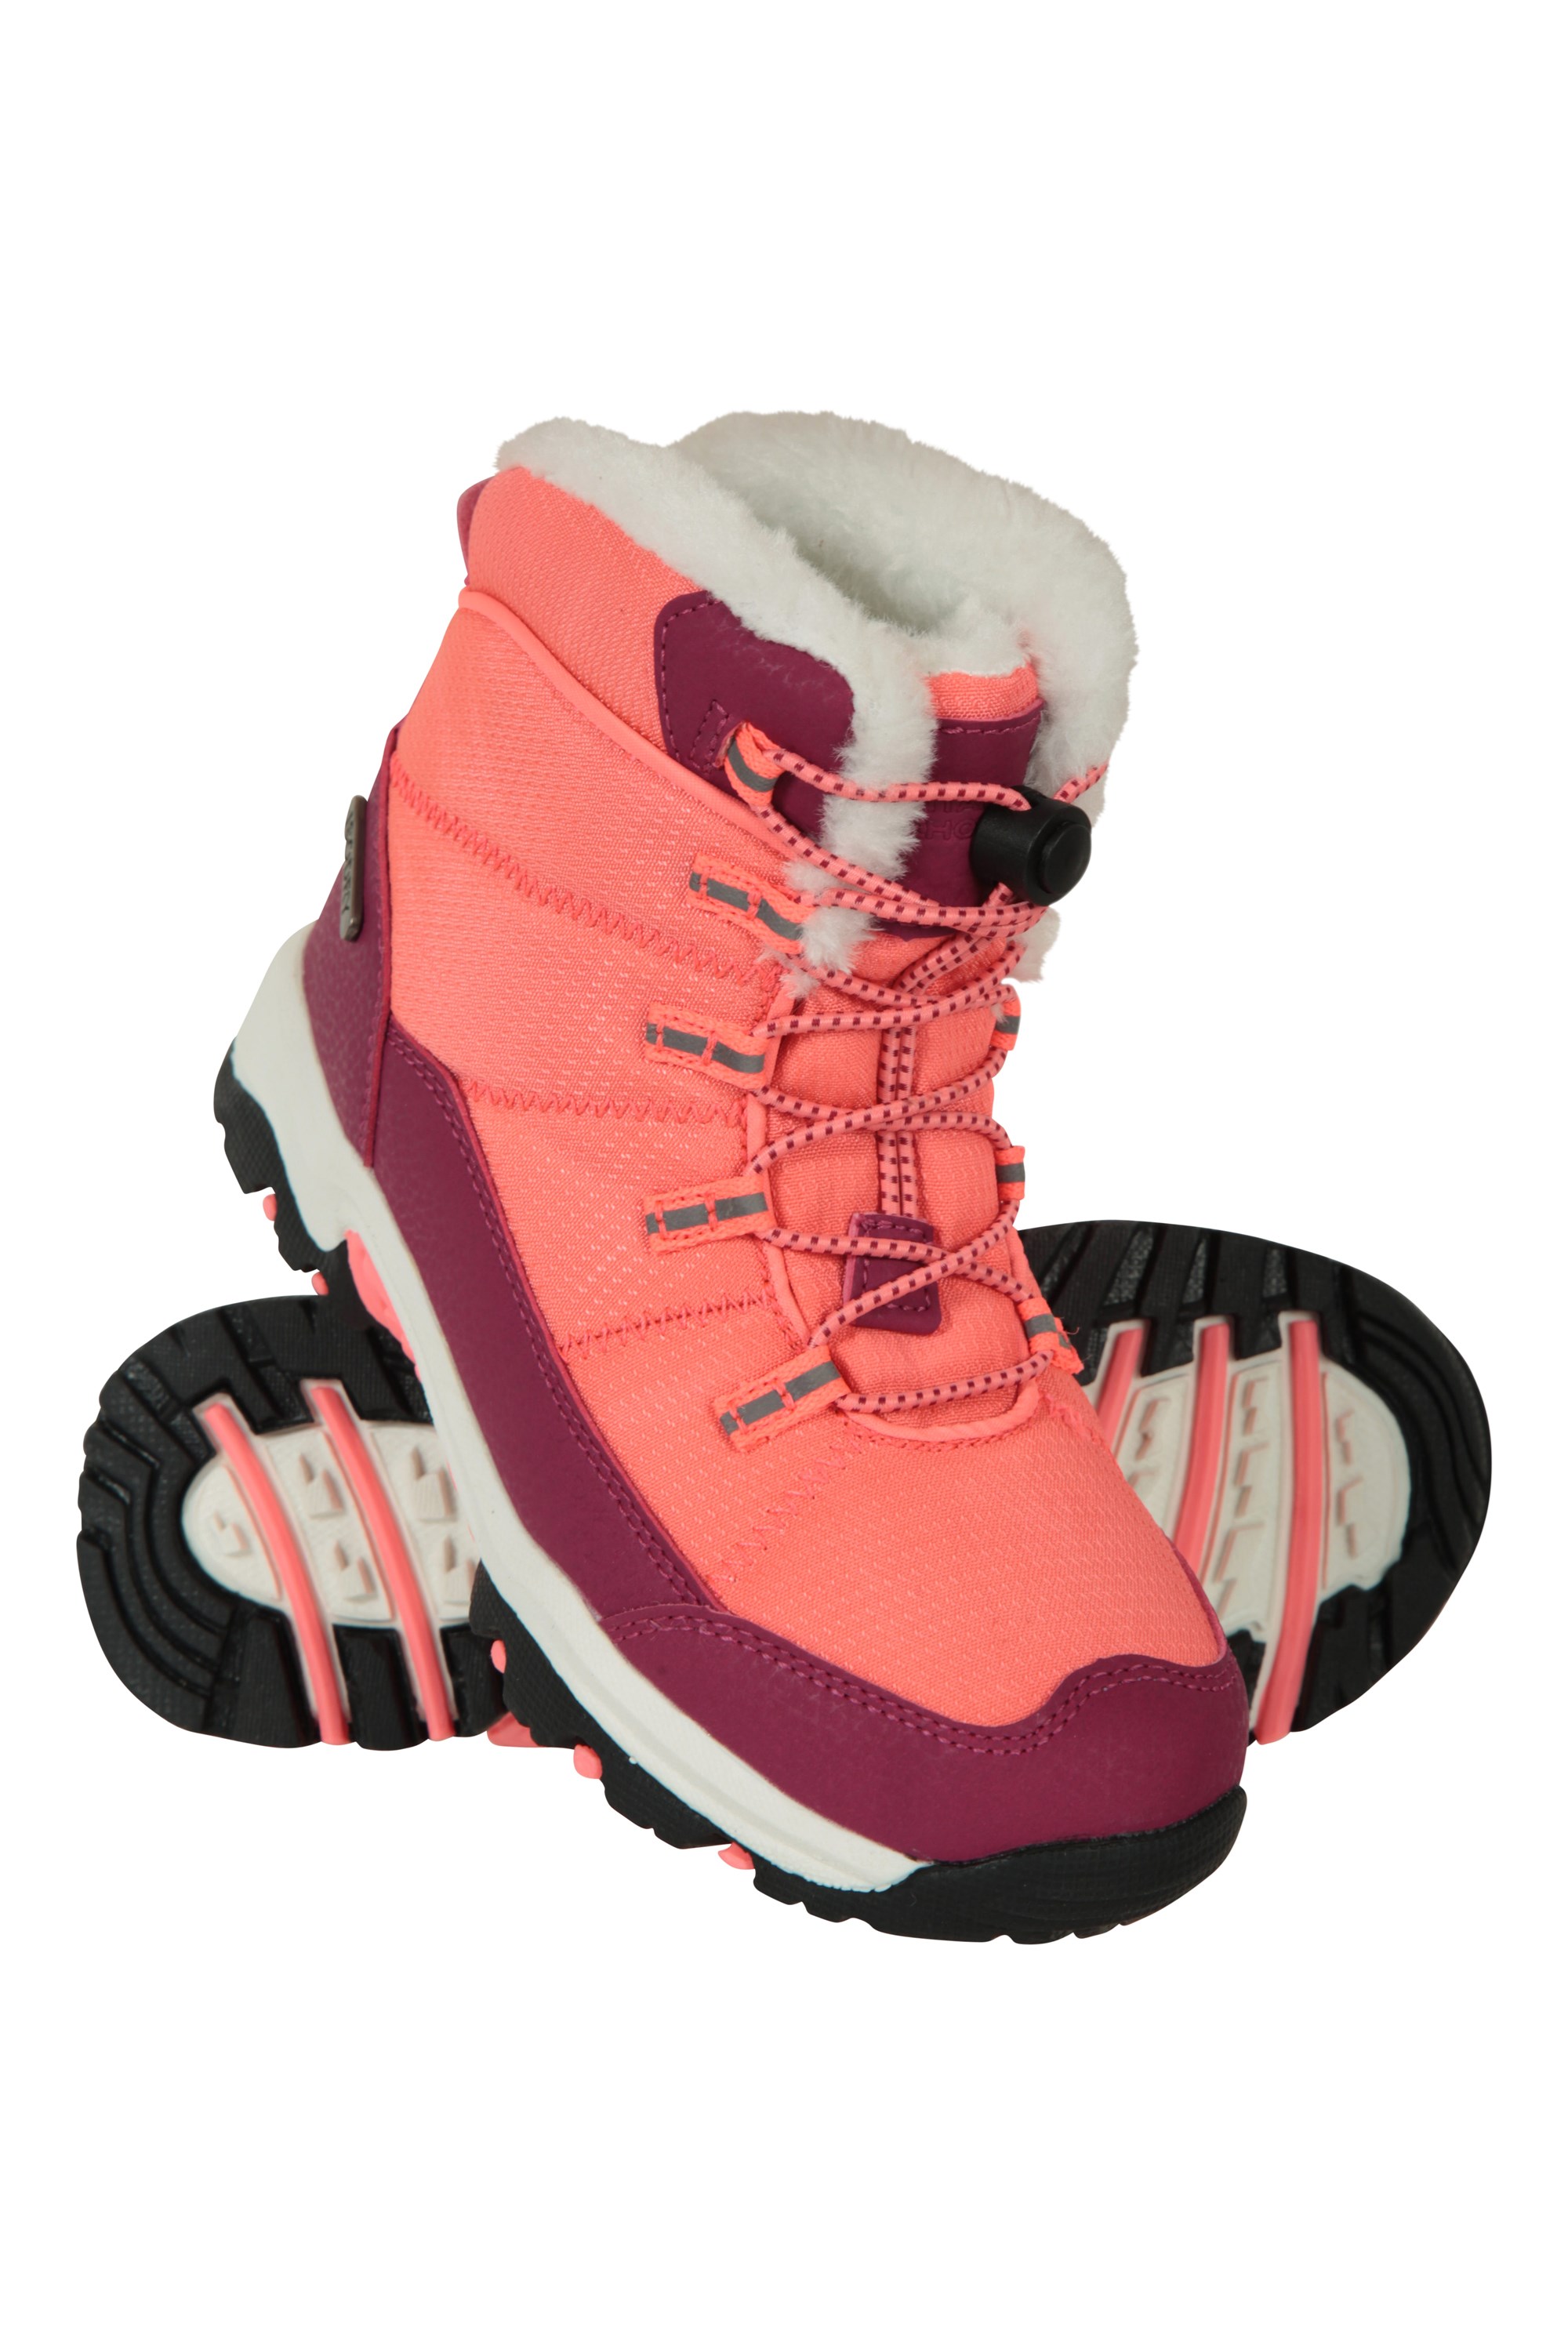 mountain warehouse kids boots